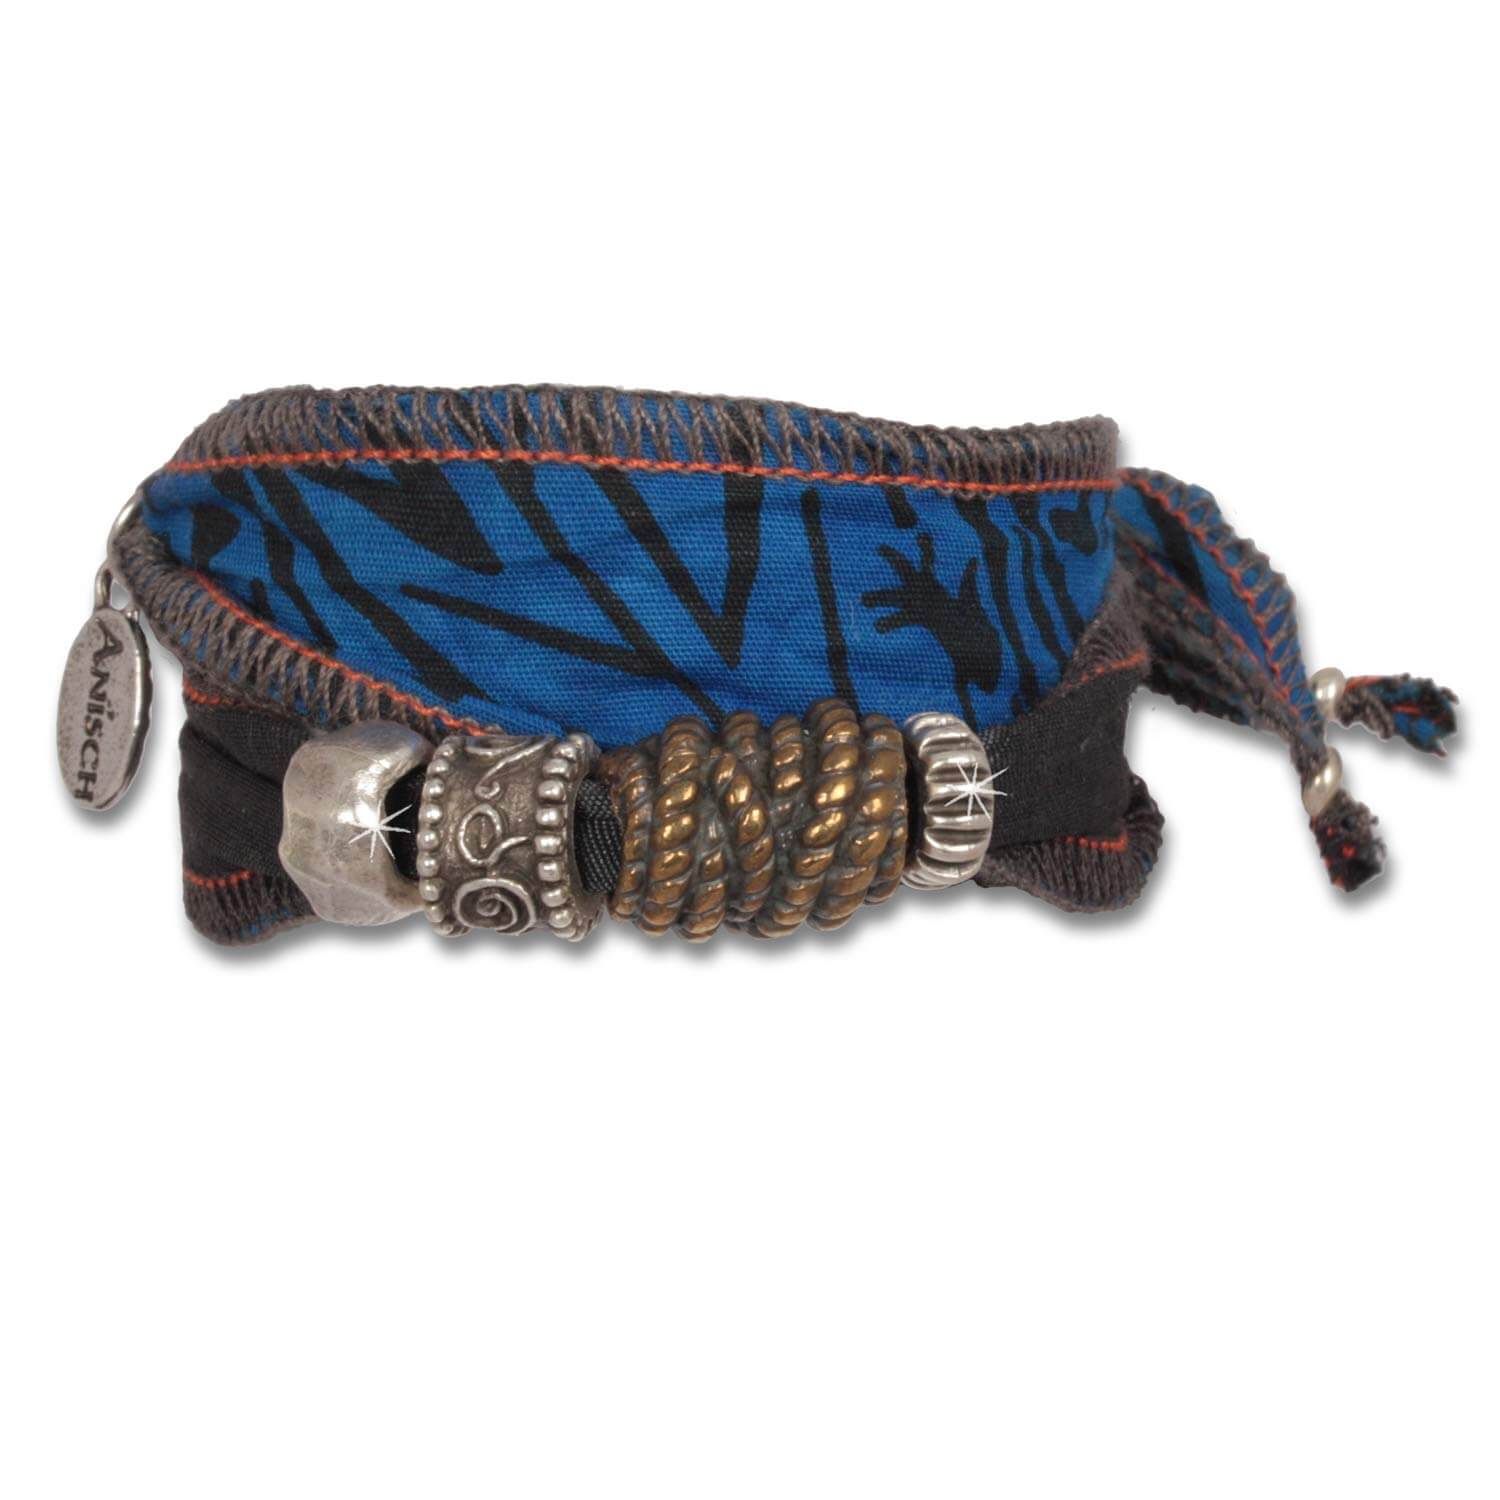 Indigo Massai - Tribal Beads men bracelet from African fabrics